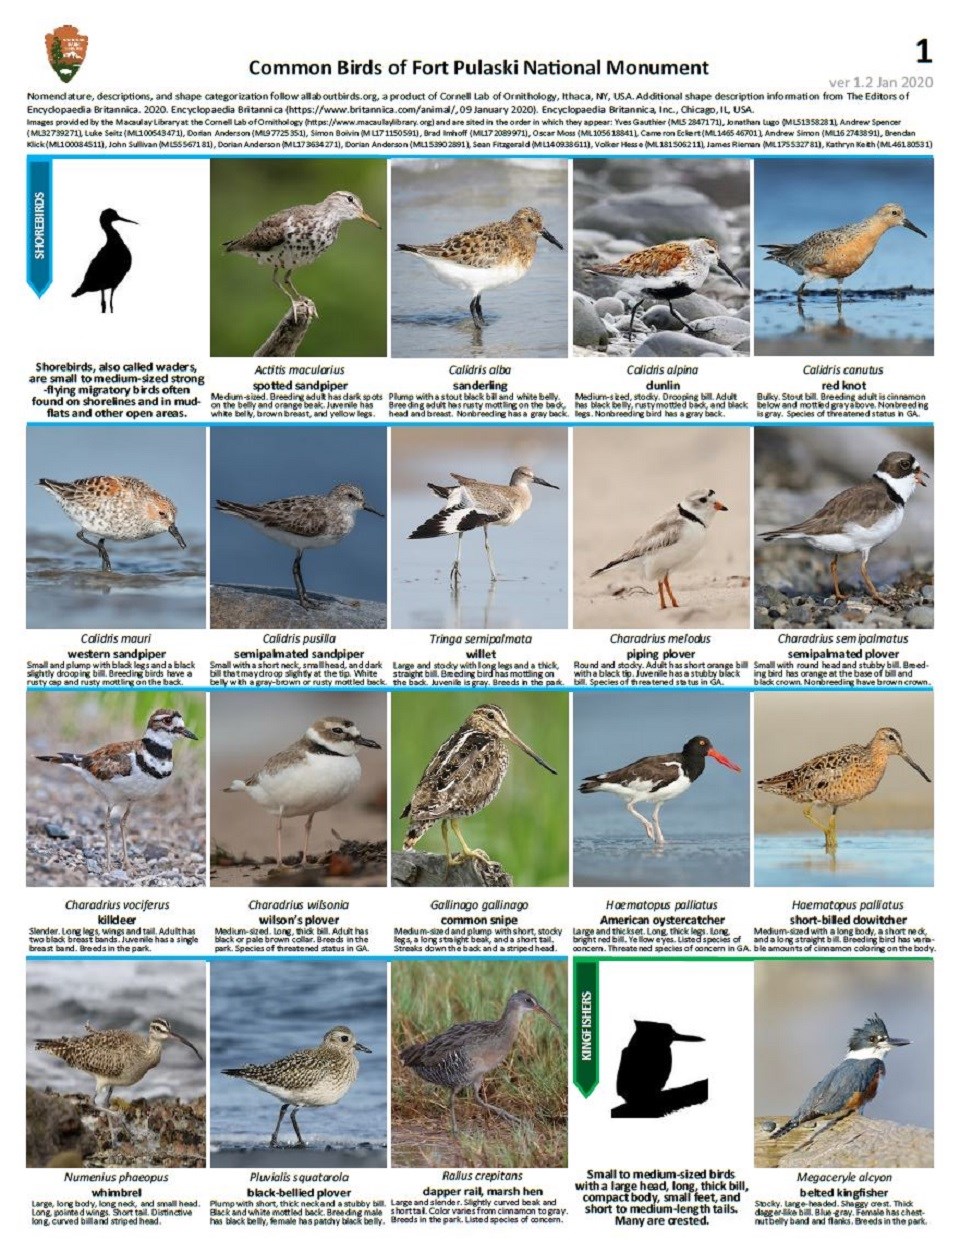 FOPU Bird ID Guide Page 1 - Shorebirds and Kingfishers